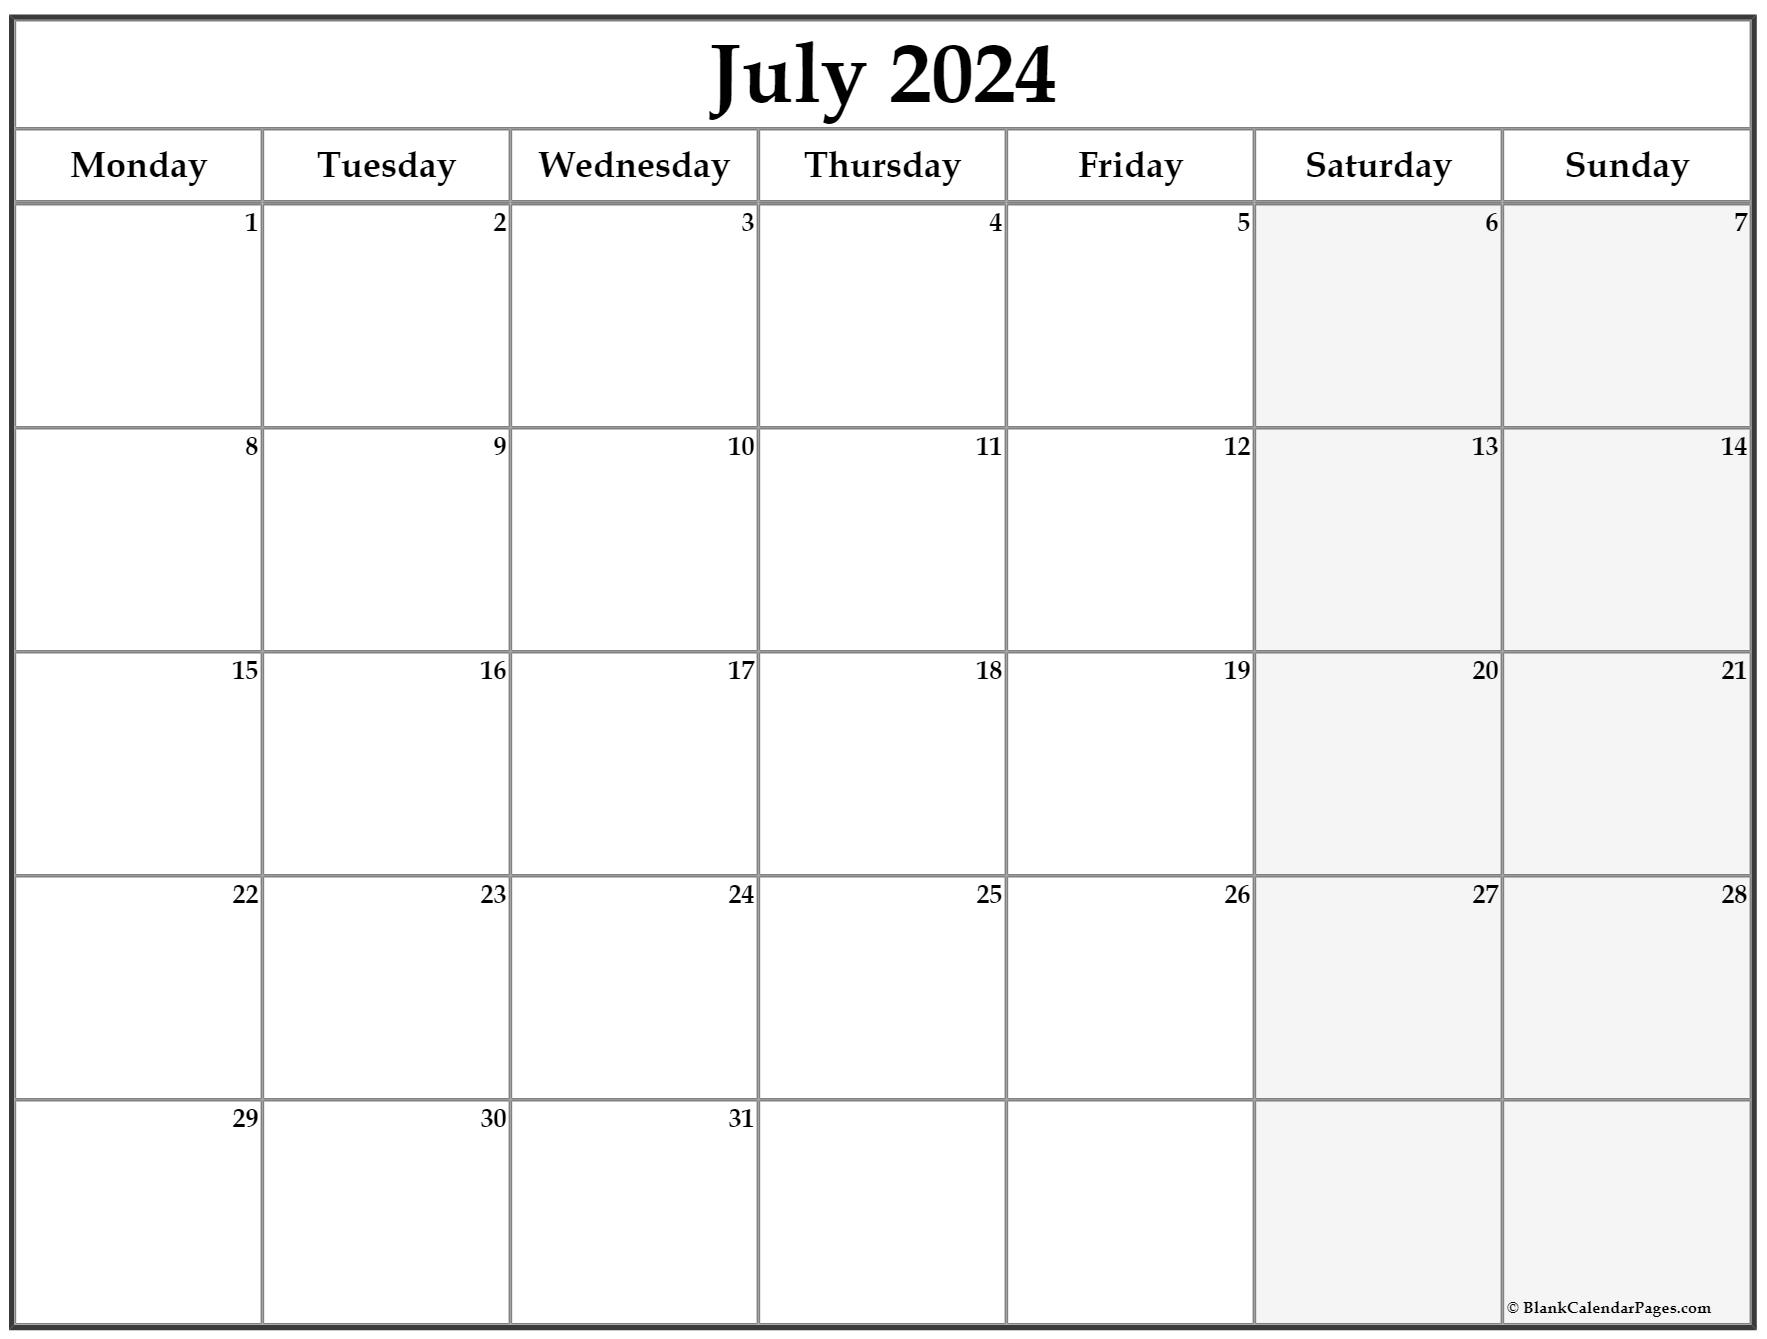 july-2023-monday-calendar-monday-to-sunday-pelajaran